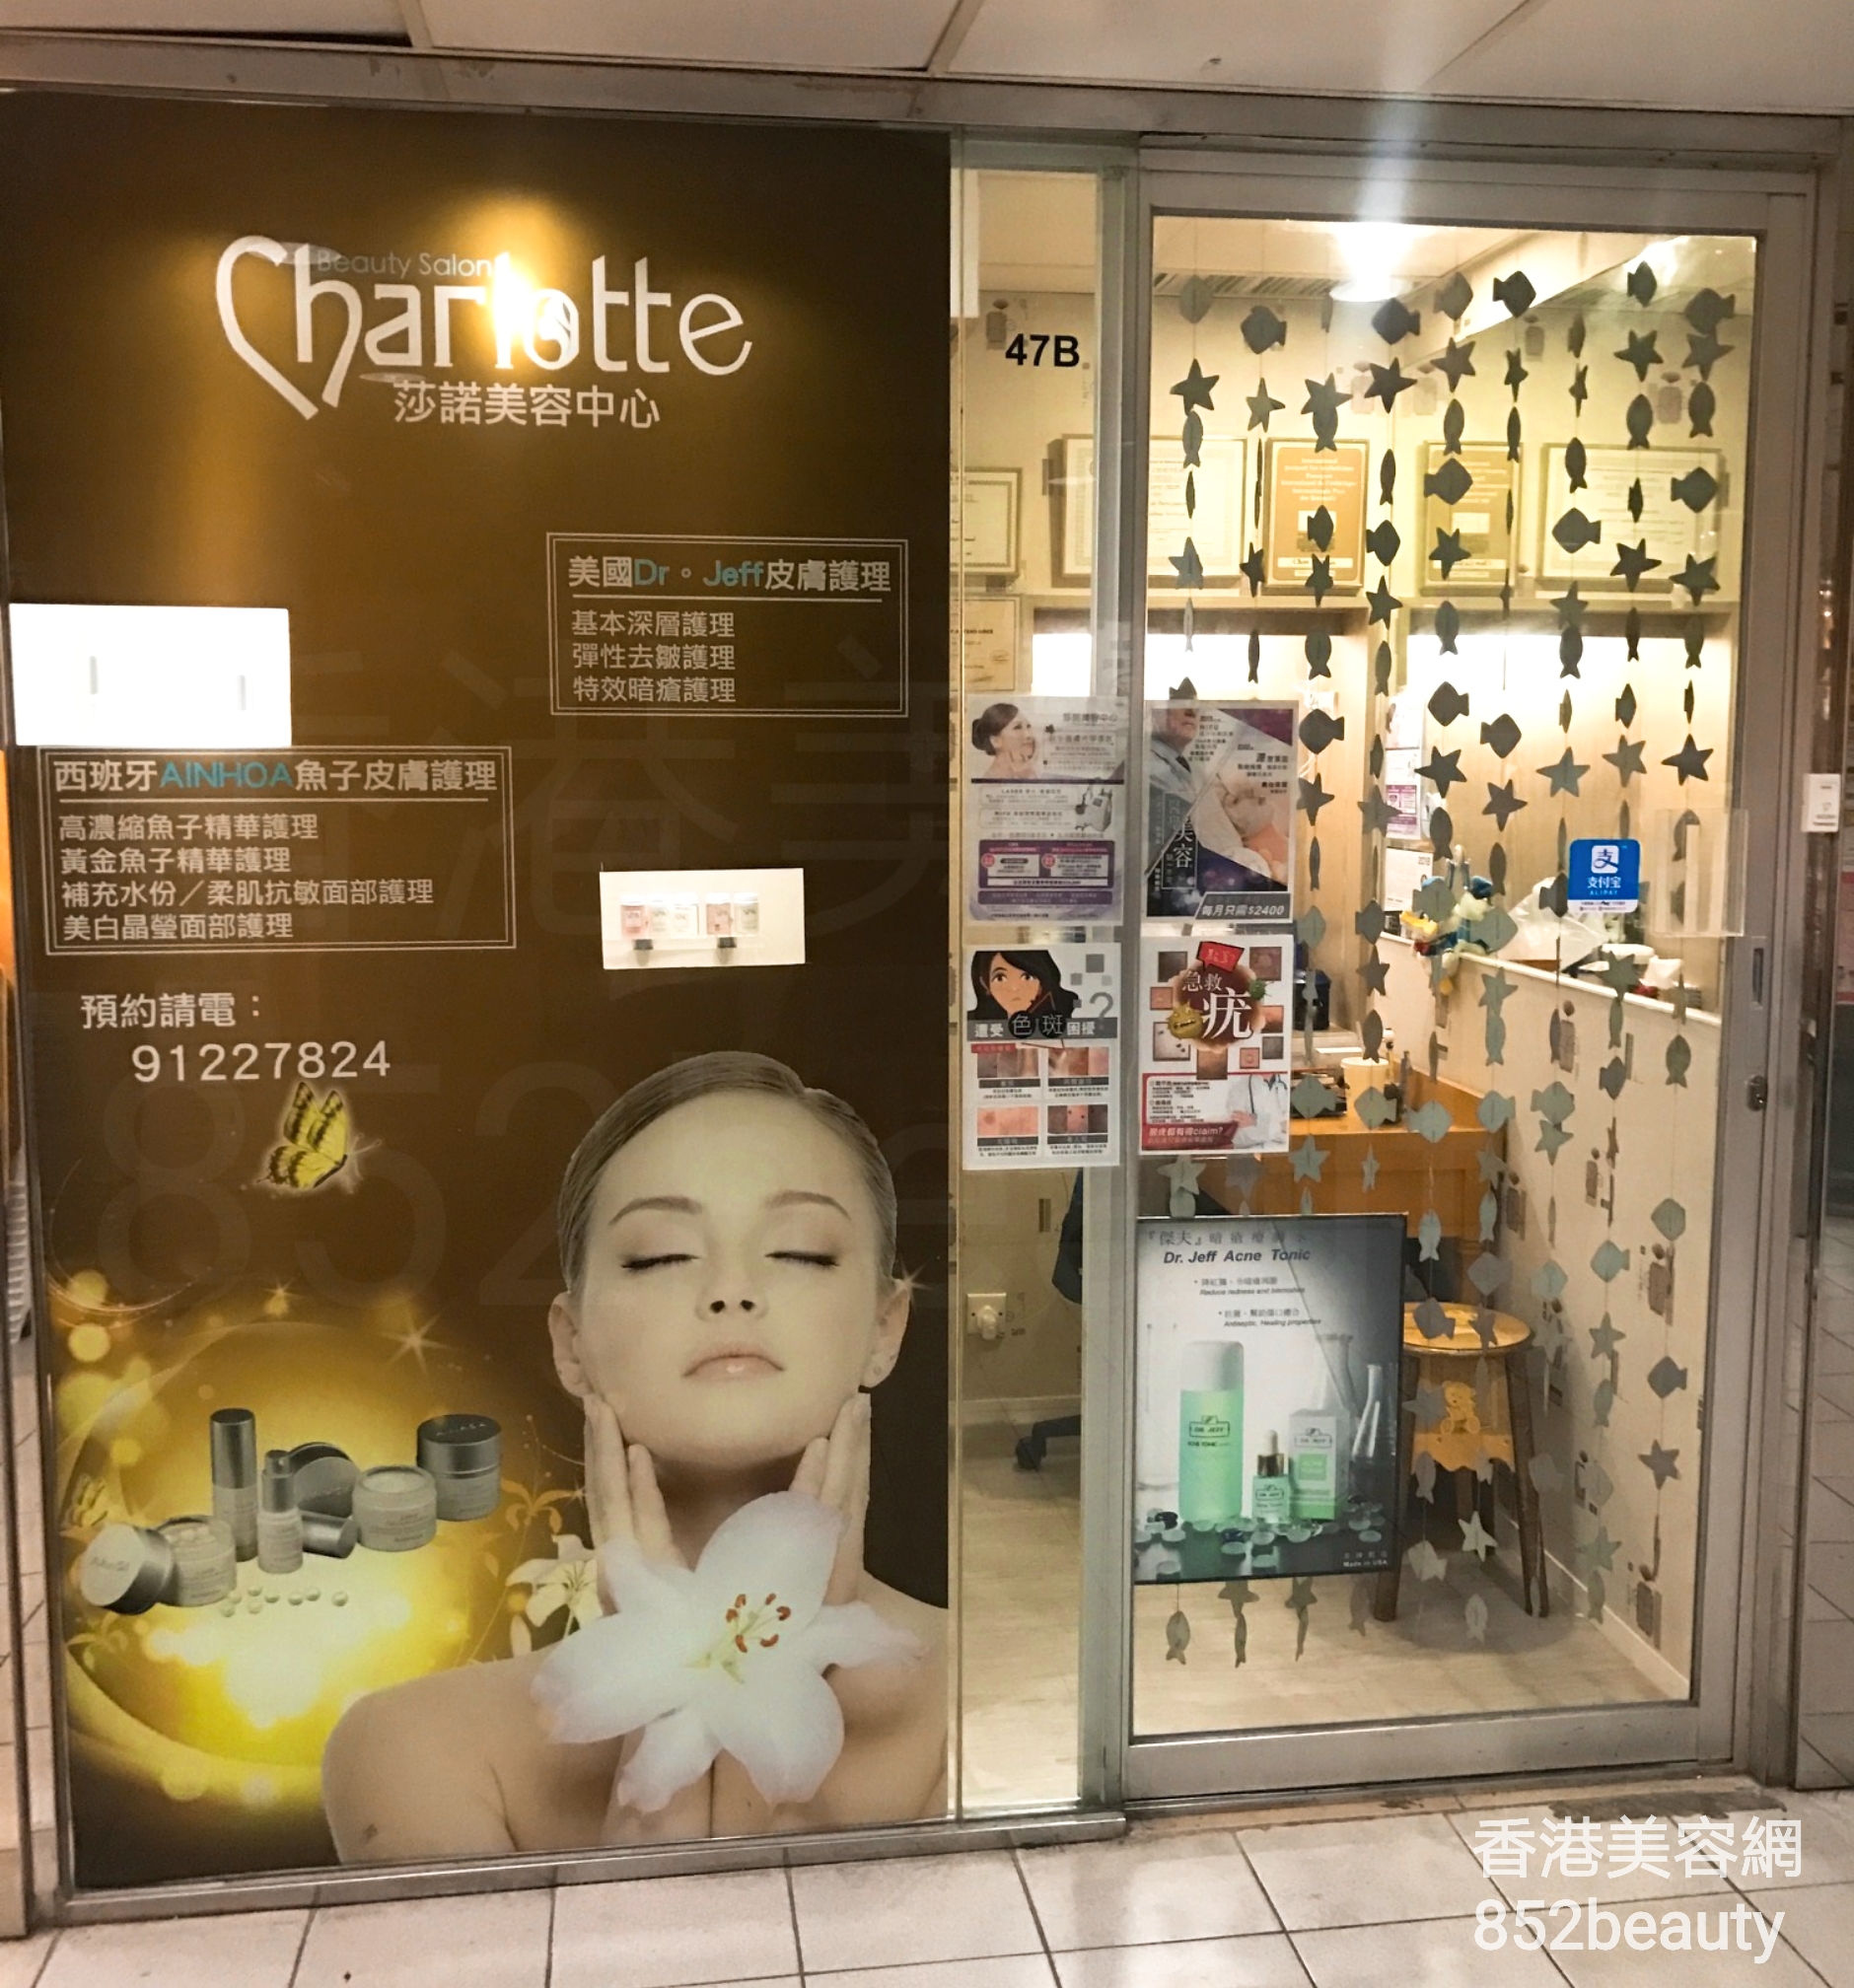 香港美容網 Hong Kong Beauty Salon 美容院 / 美容師: 莎諾美容中心 Charlotte Beauty Salon